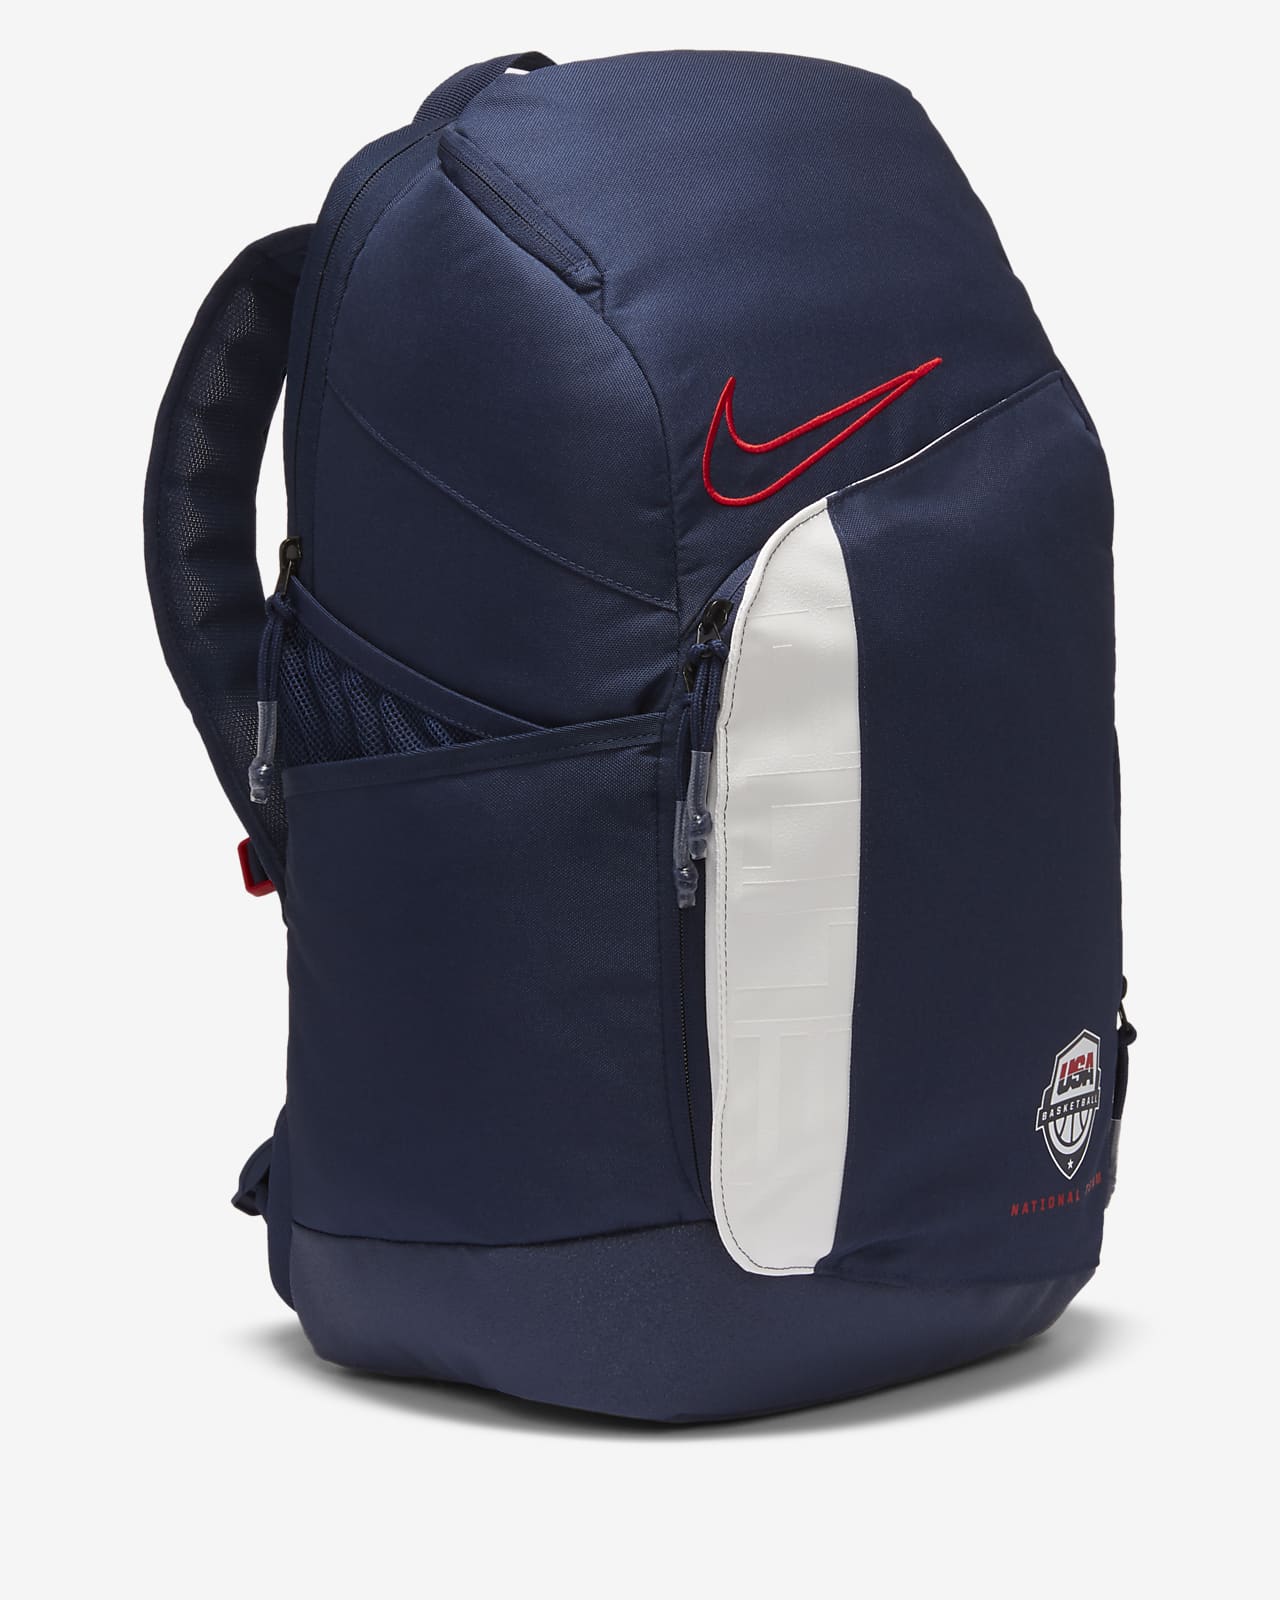 Nike Team USA Elite Pro Basketball Backpack